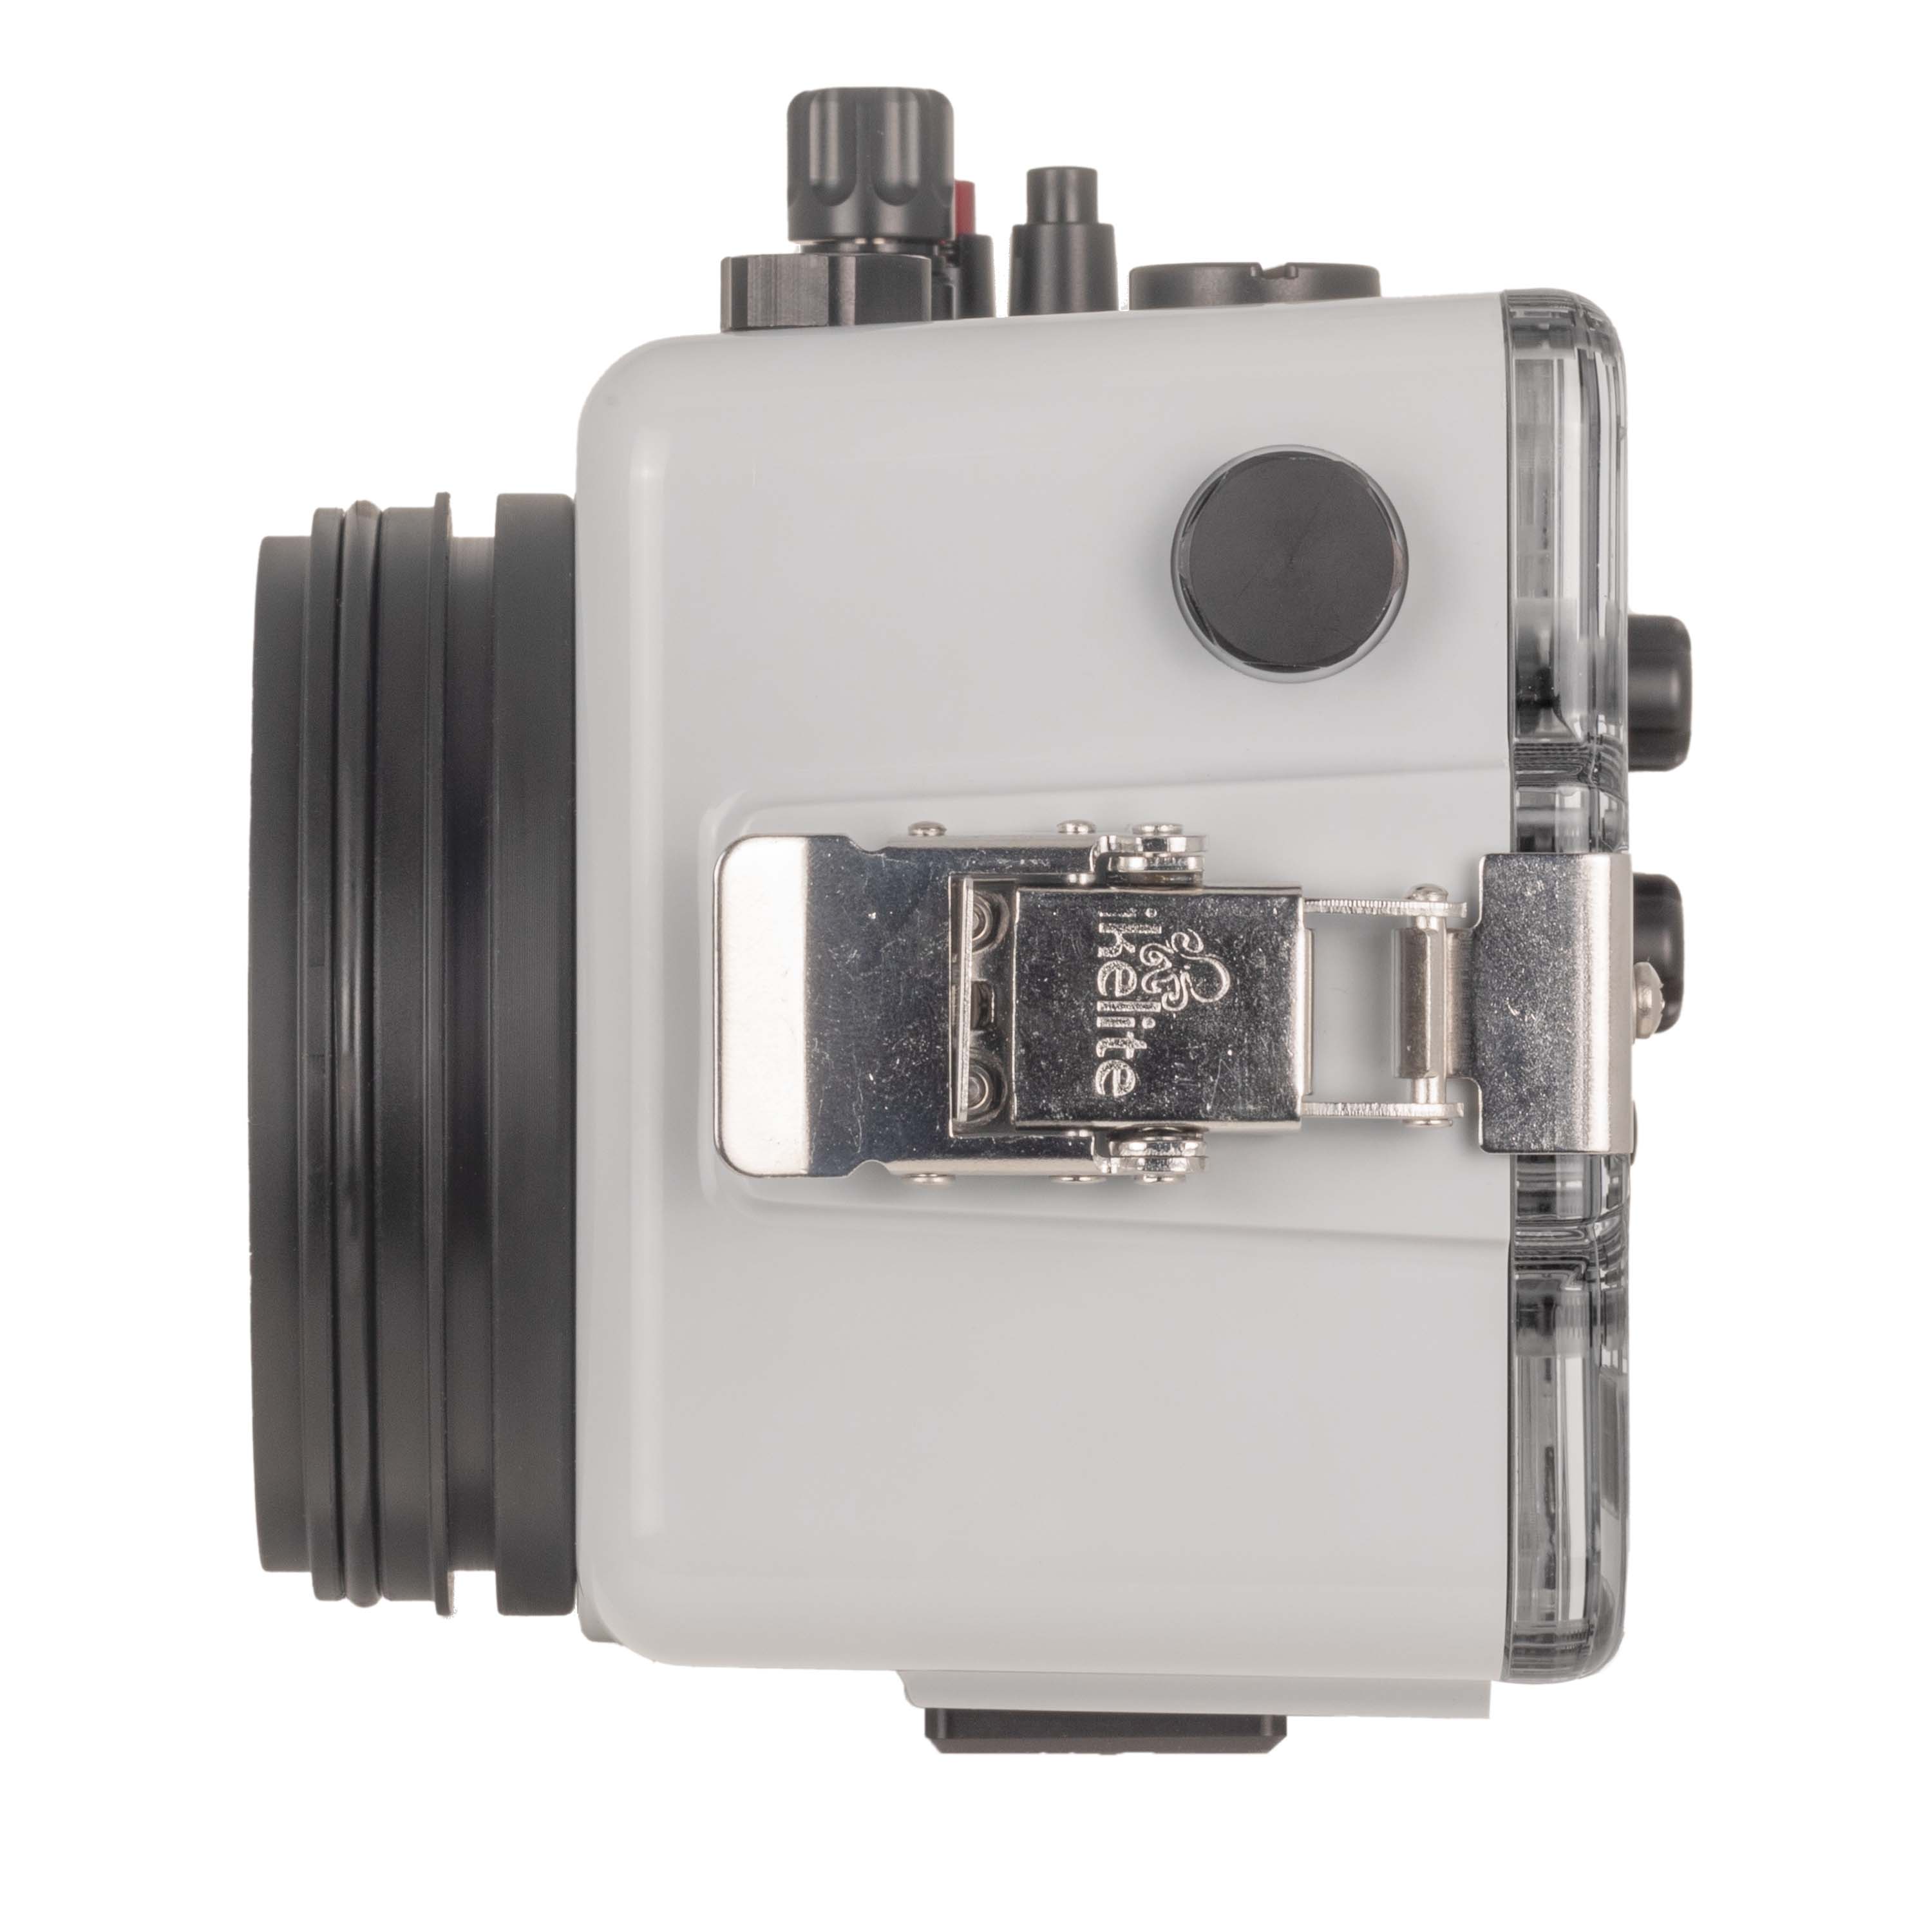 Ikelite 200DLM/A Underwater Housing for Sony ZV-E10 Mirrorless Cameras